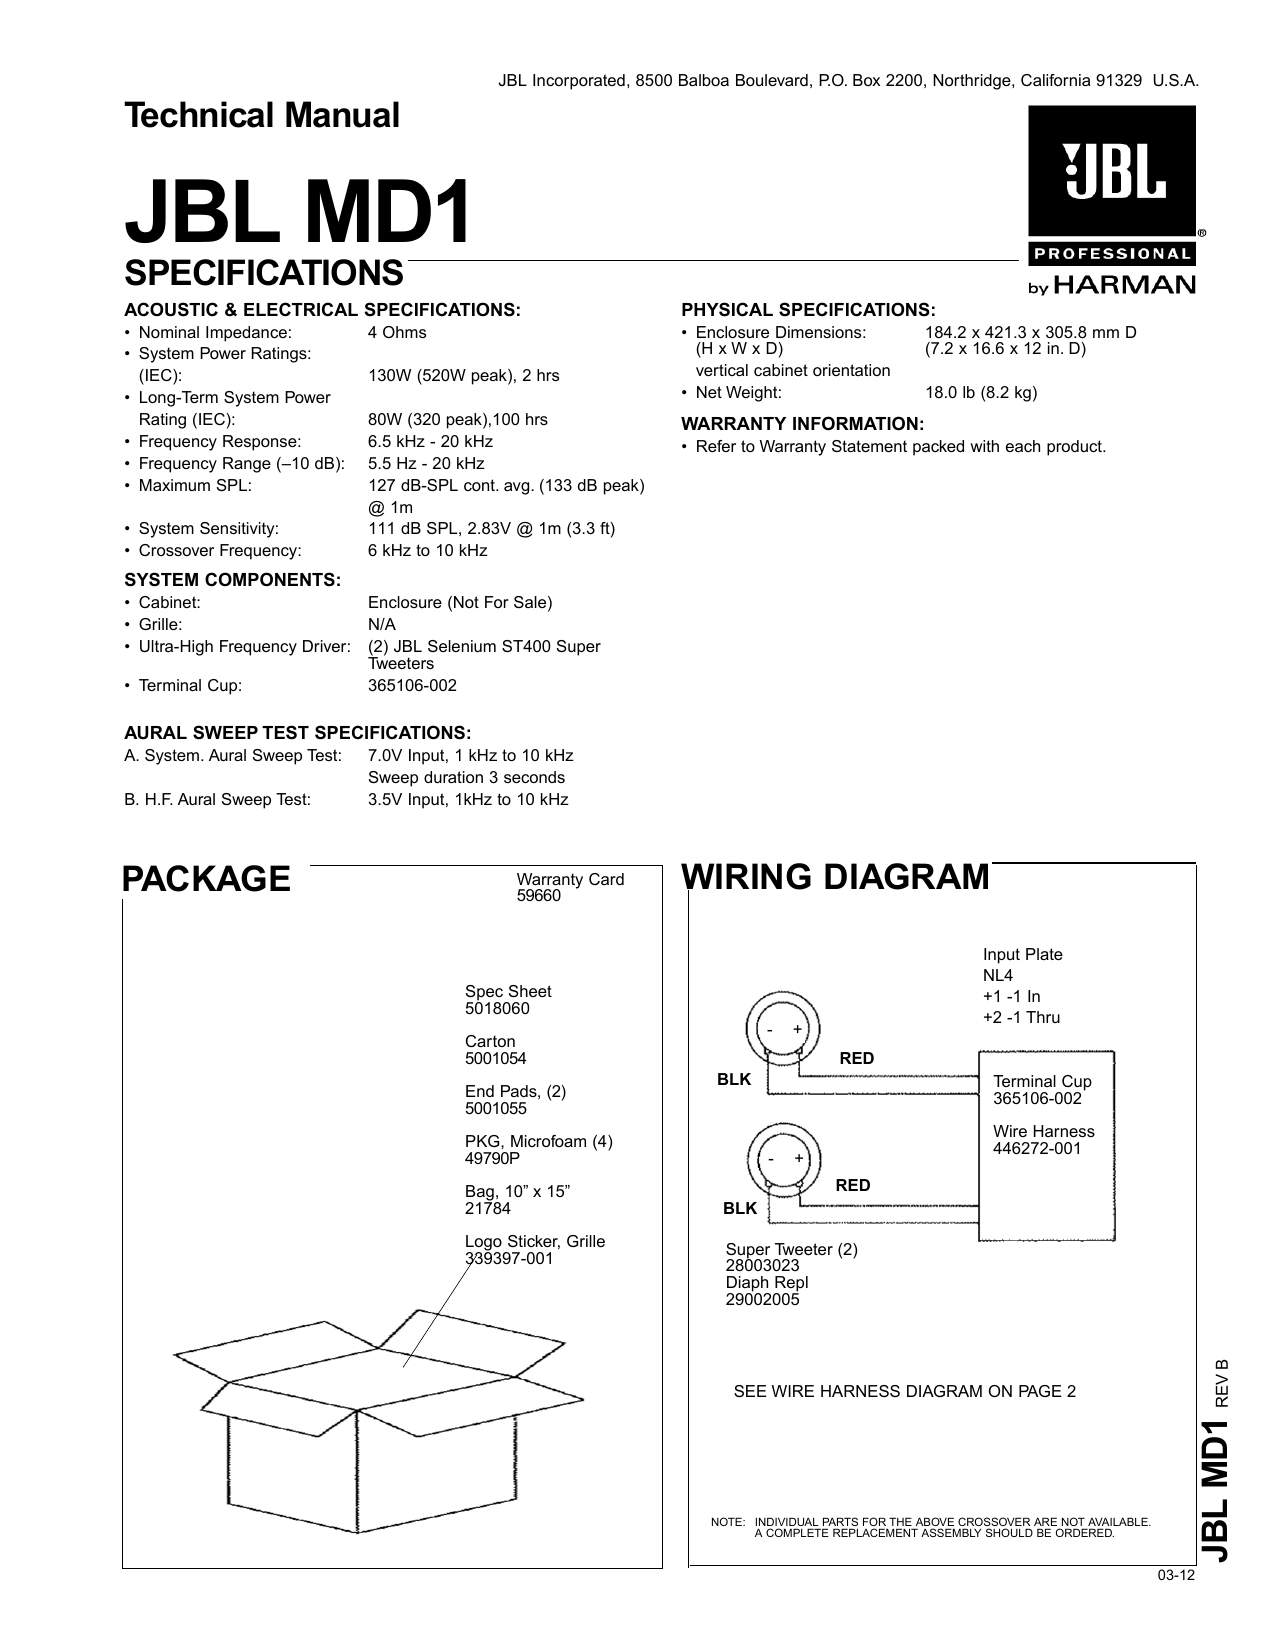 MD1, JBL Professional Loudspeakers